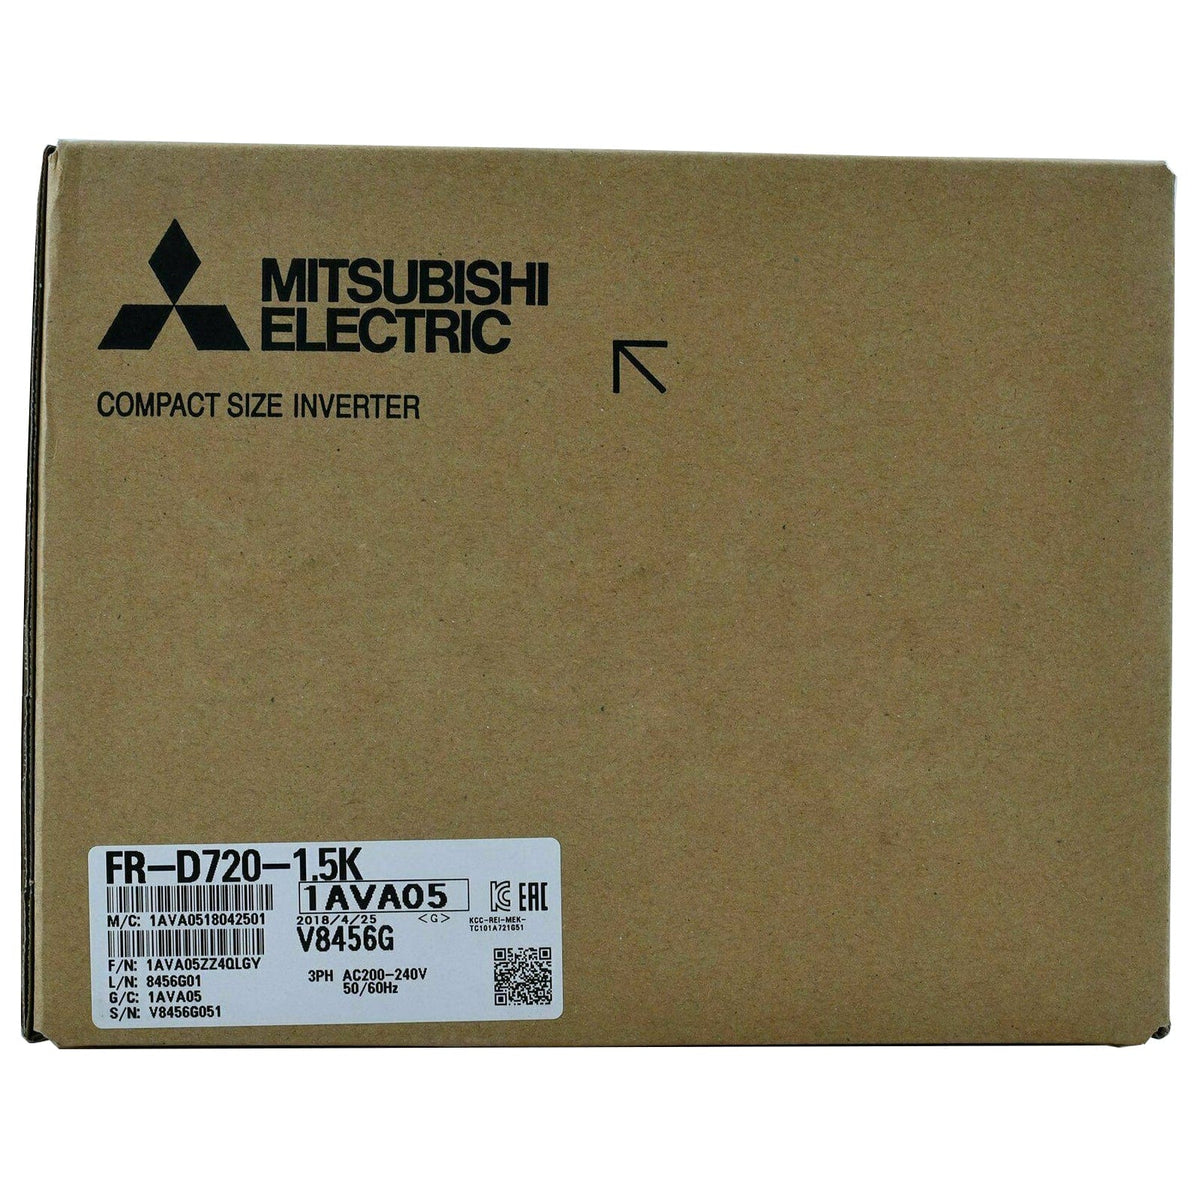 Mitsubishi FR-D720-1.5K Compact Size Inverter